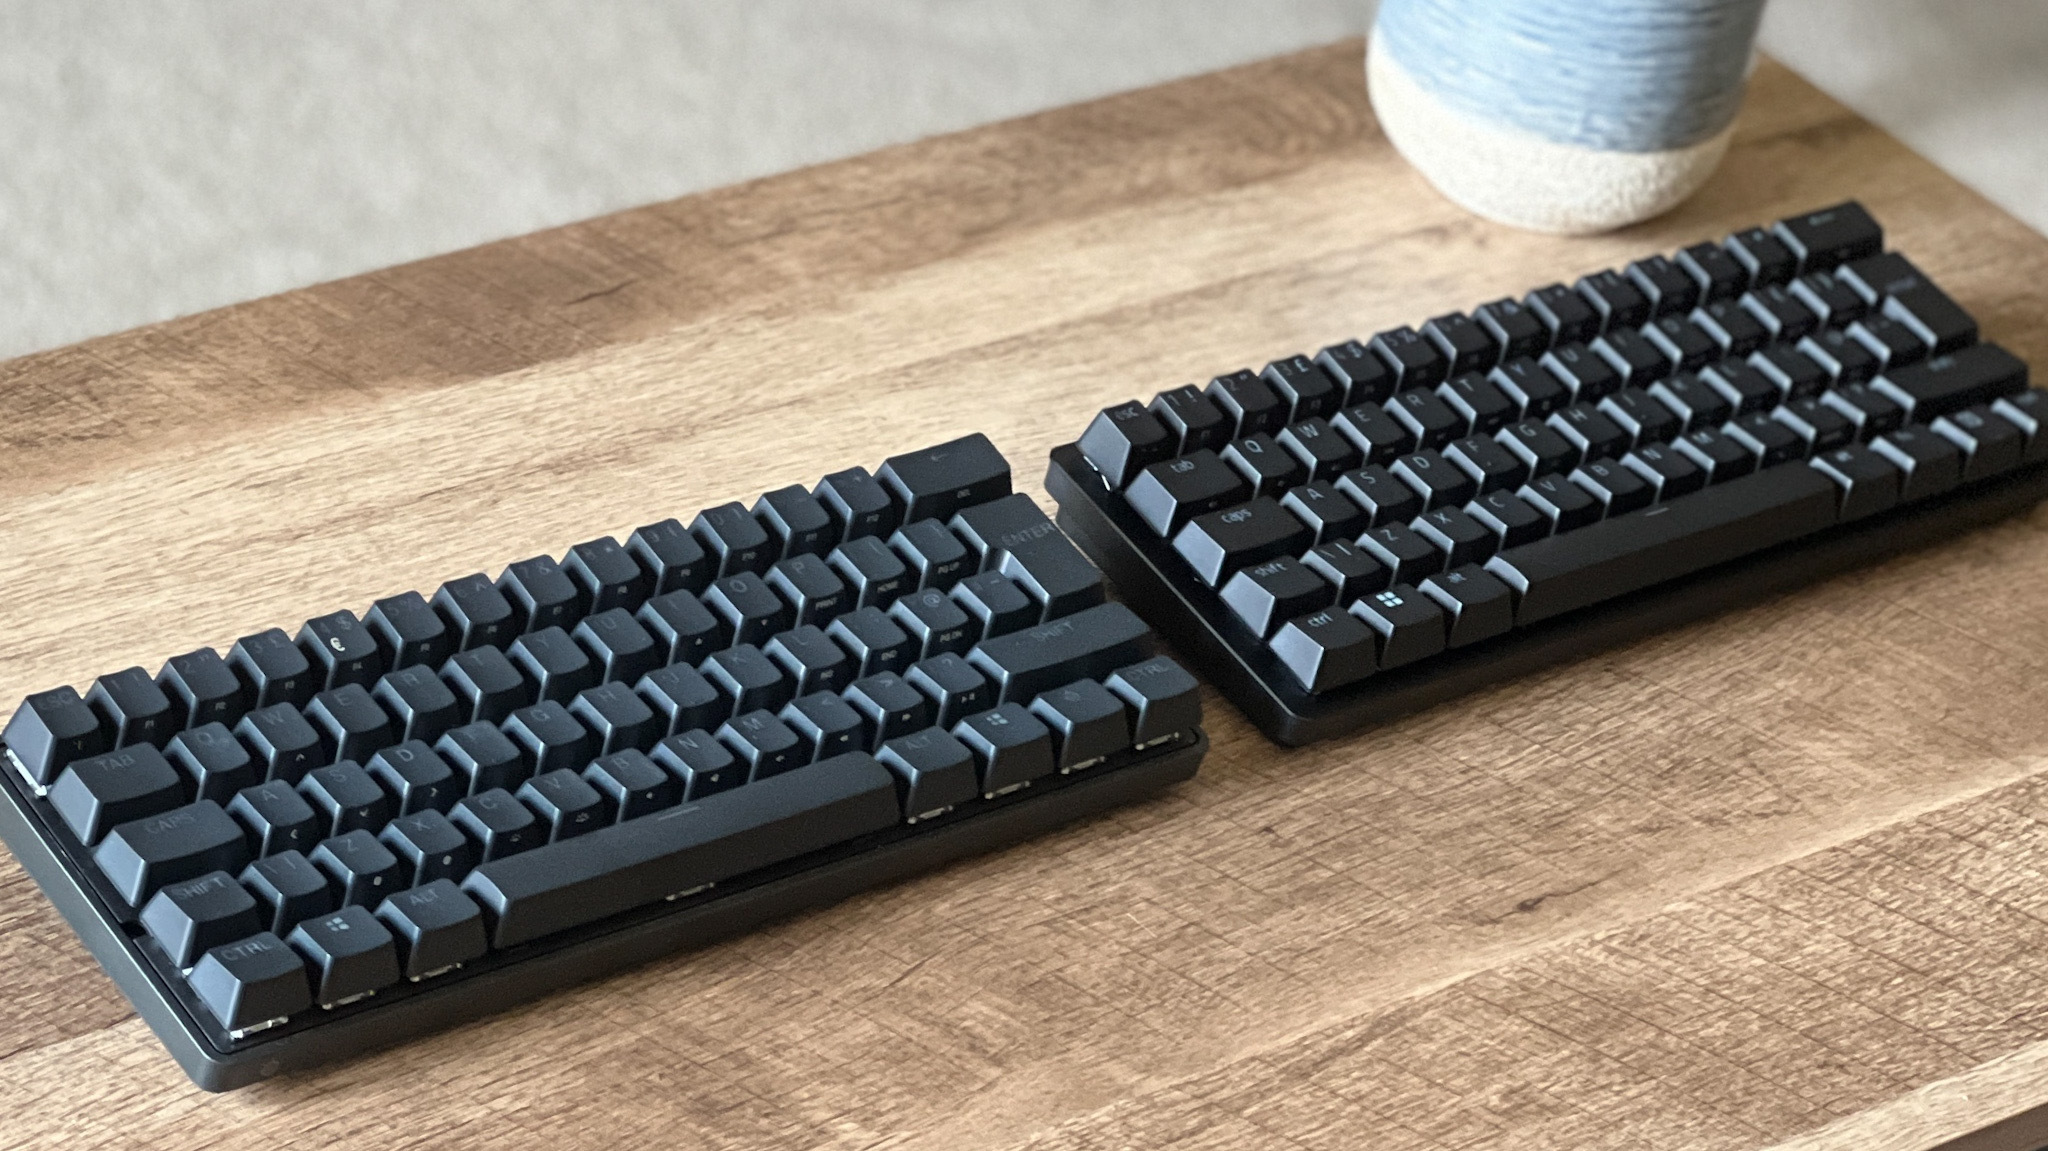 SteelSeries Apex Pro Mini Keyboard